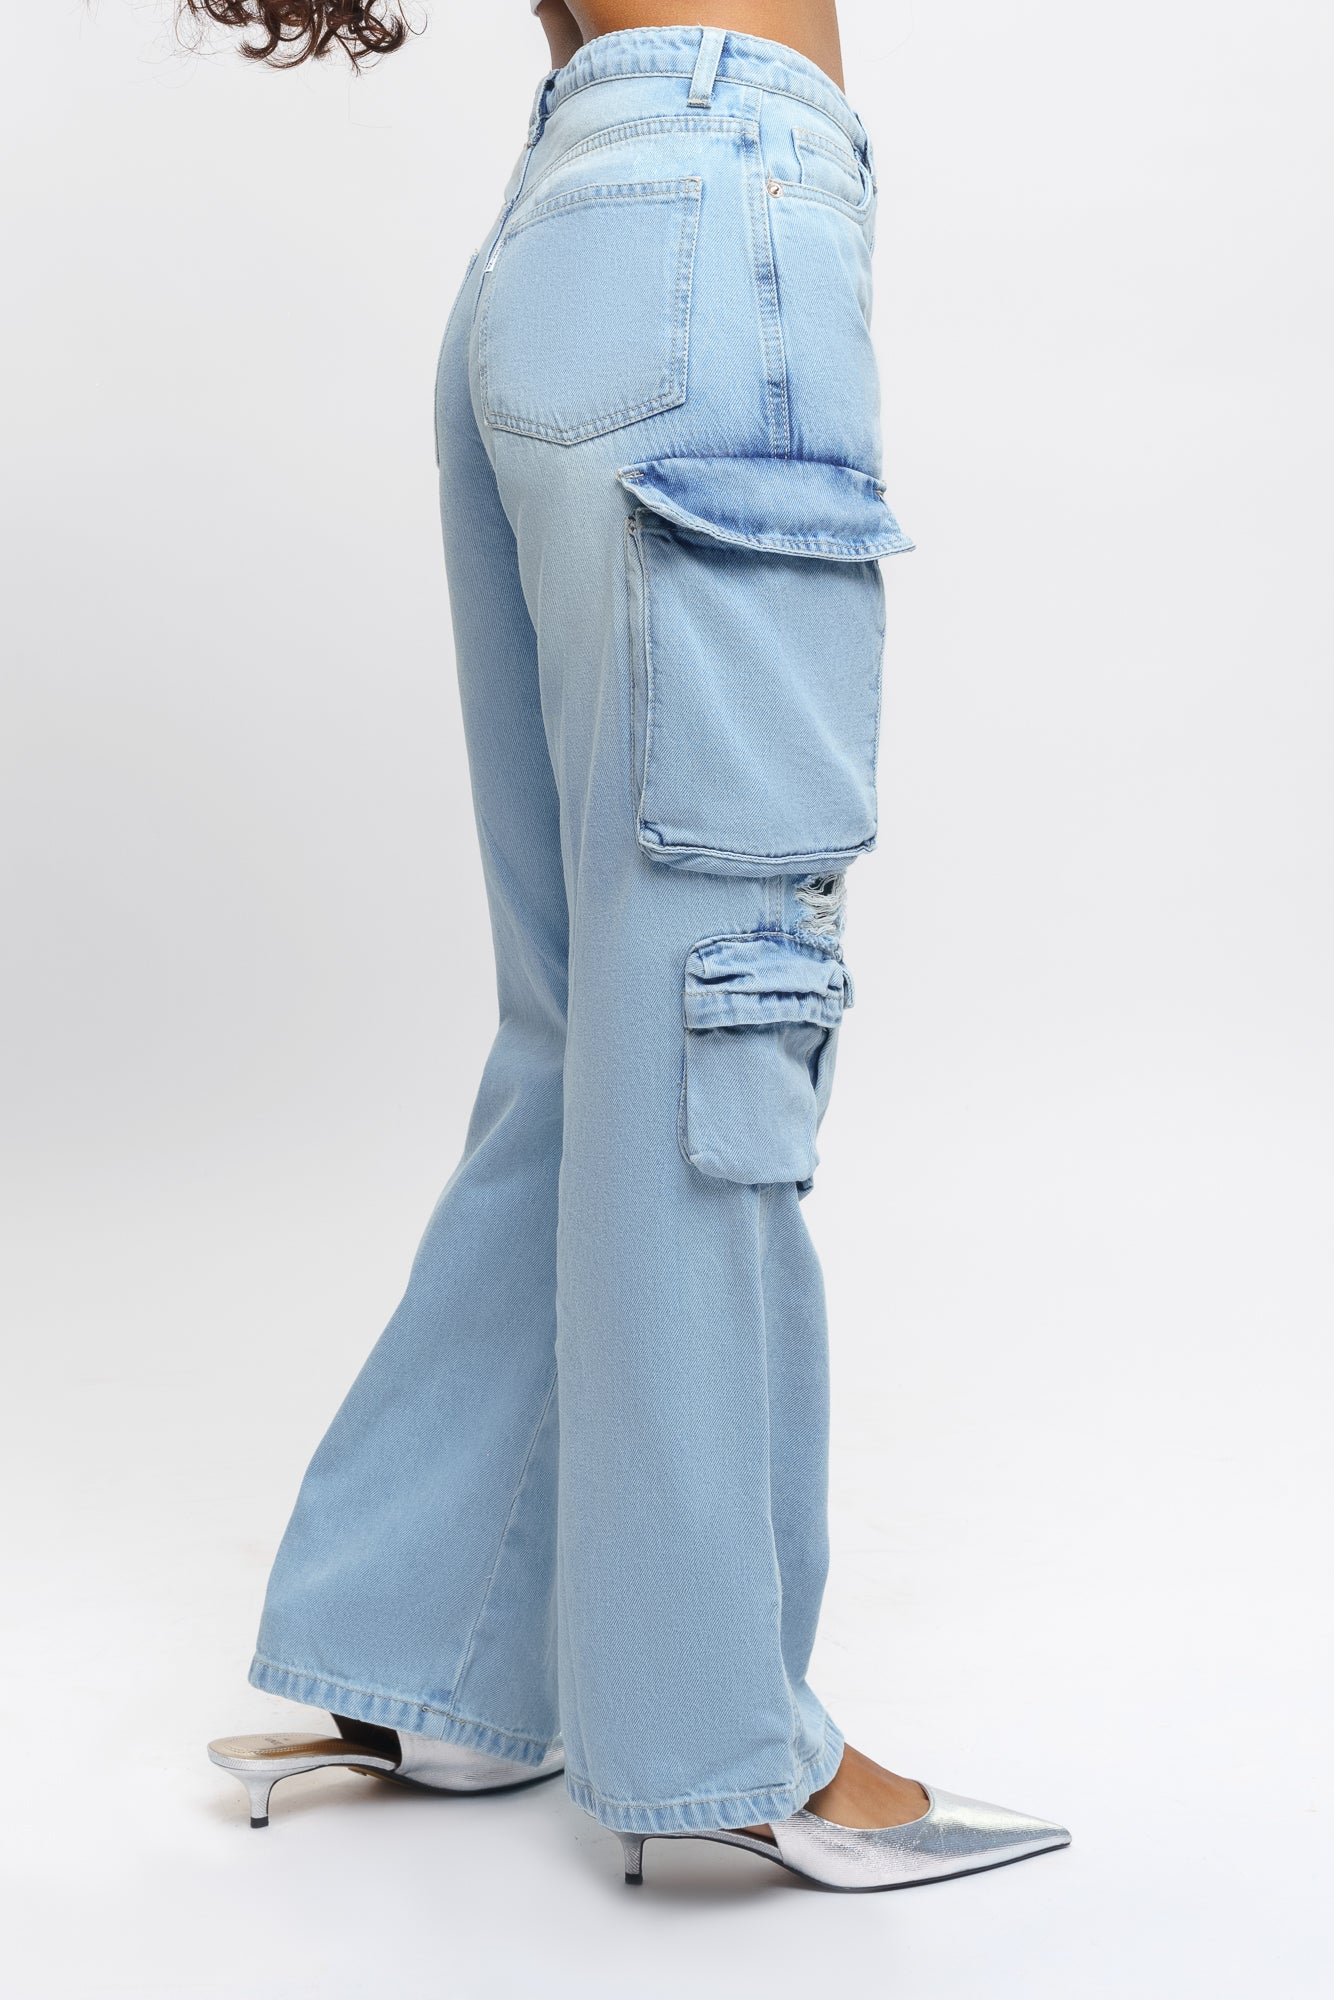 Kymaro Curve Control Jeans Size 21/22 Bootcut Dark Wash Stretch Blue Denim  NEW